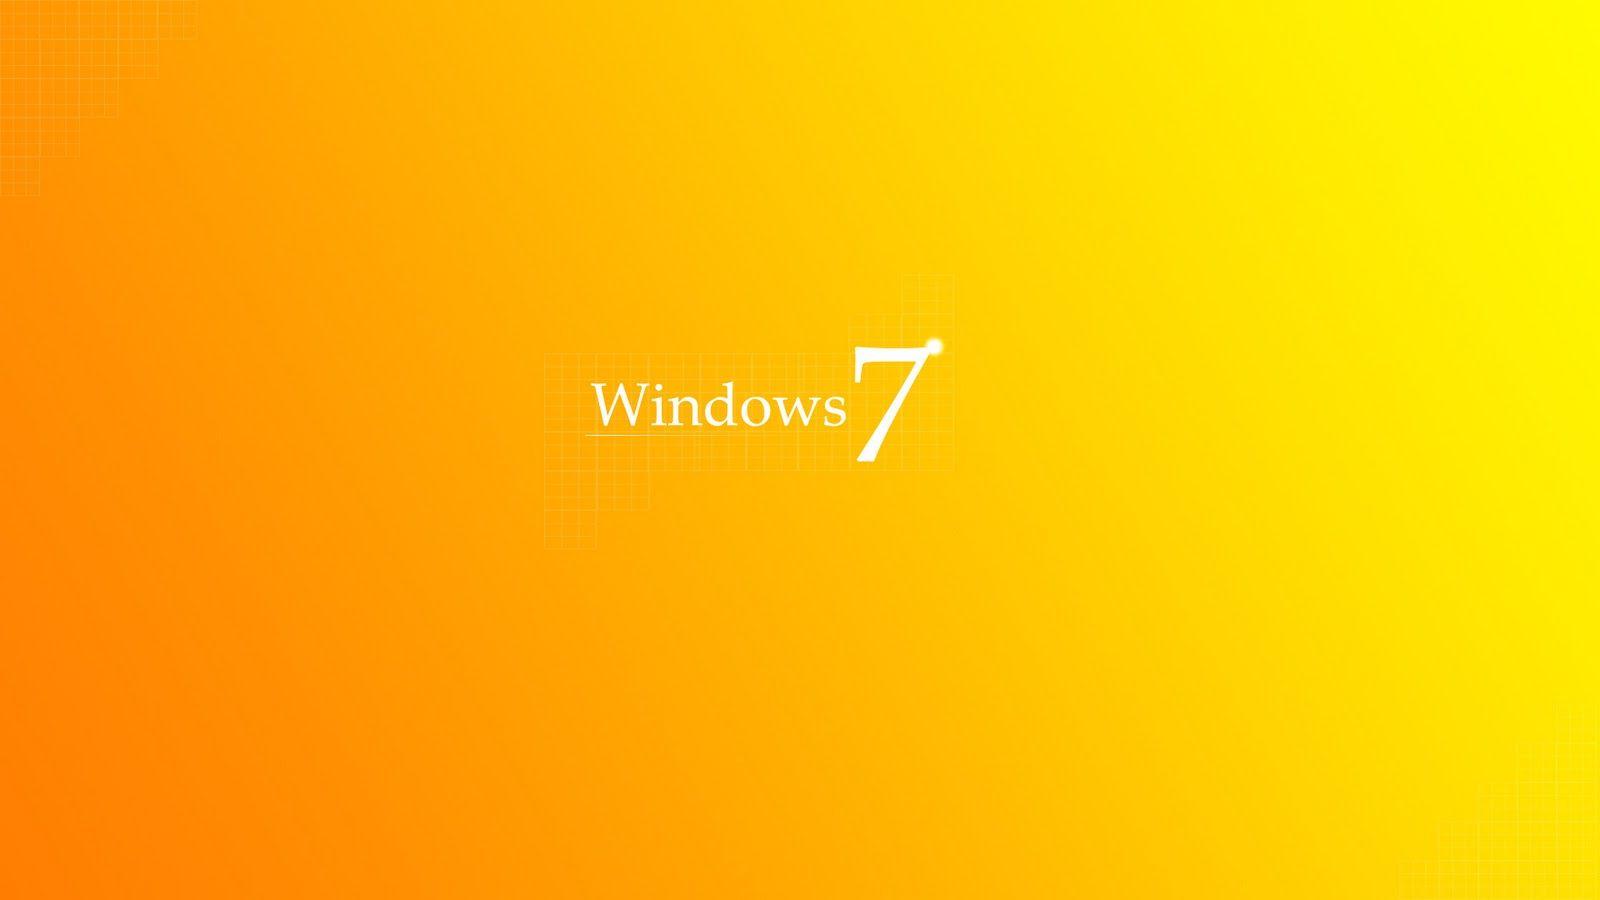 Windows 8 Logo Yellow Colour Background Wallpaper Desktop HD Cool